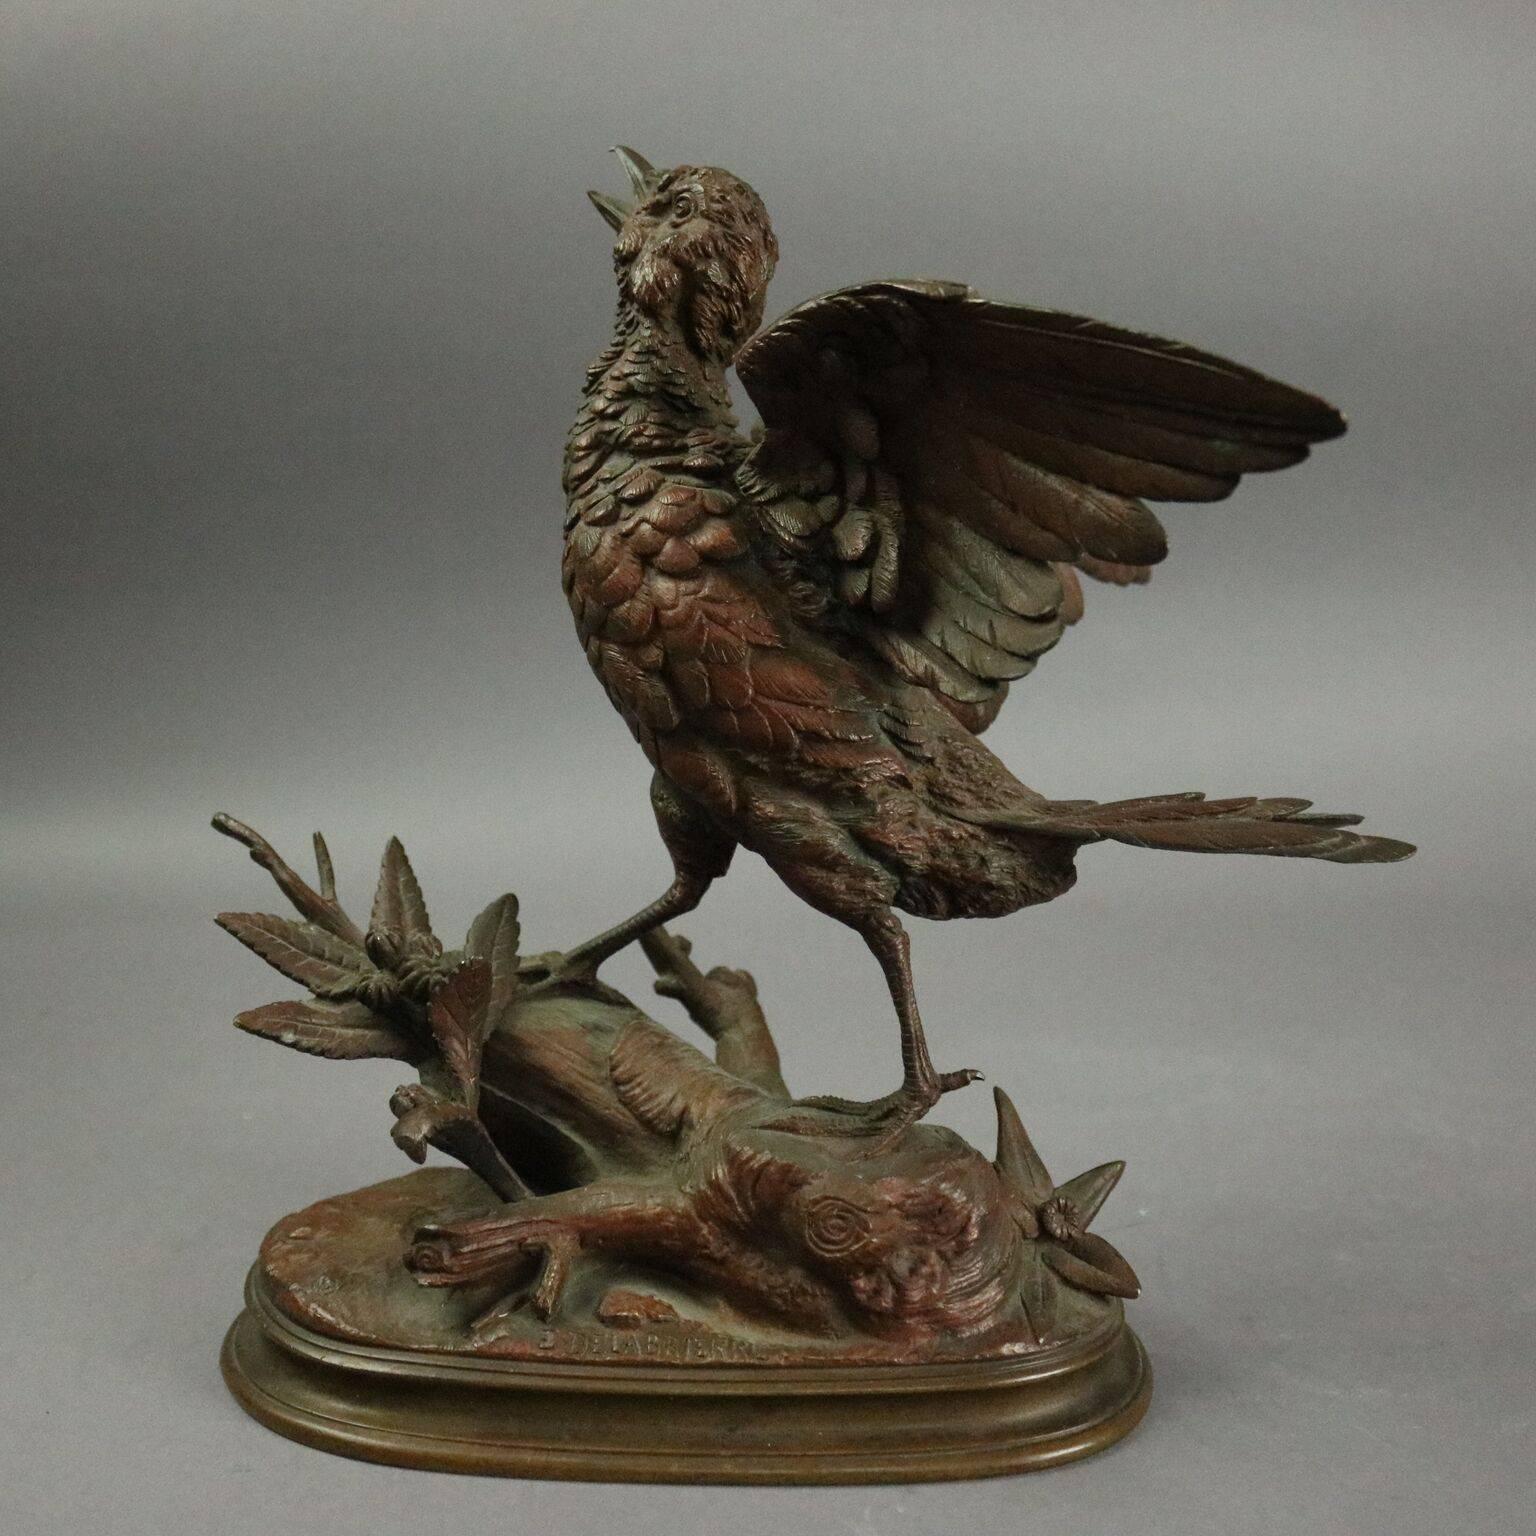 Antique French bronze song bird sculpture by Paul Edouard Delabrierre (1829-1912), subtle cold paint finish accents feather detail, circa 1900.

Measures: 10" H X 10" W X 7" D.

Paul-Édouard Delabrièrre (29 March 1829 – 1912) was